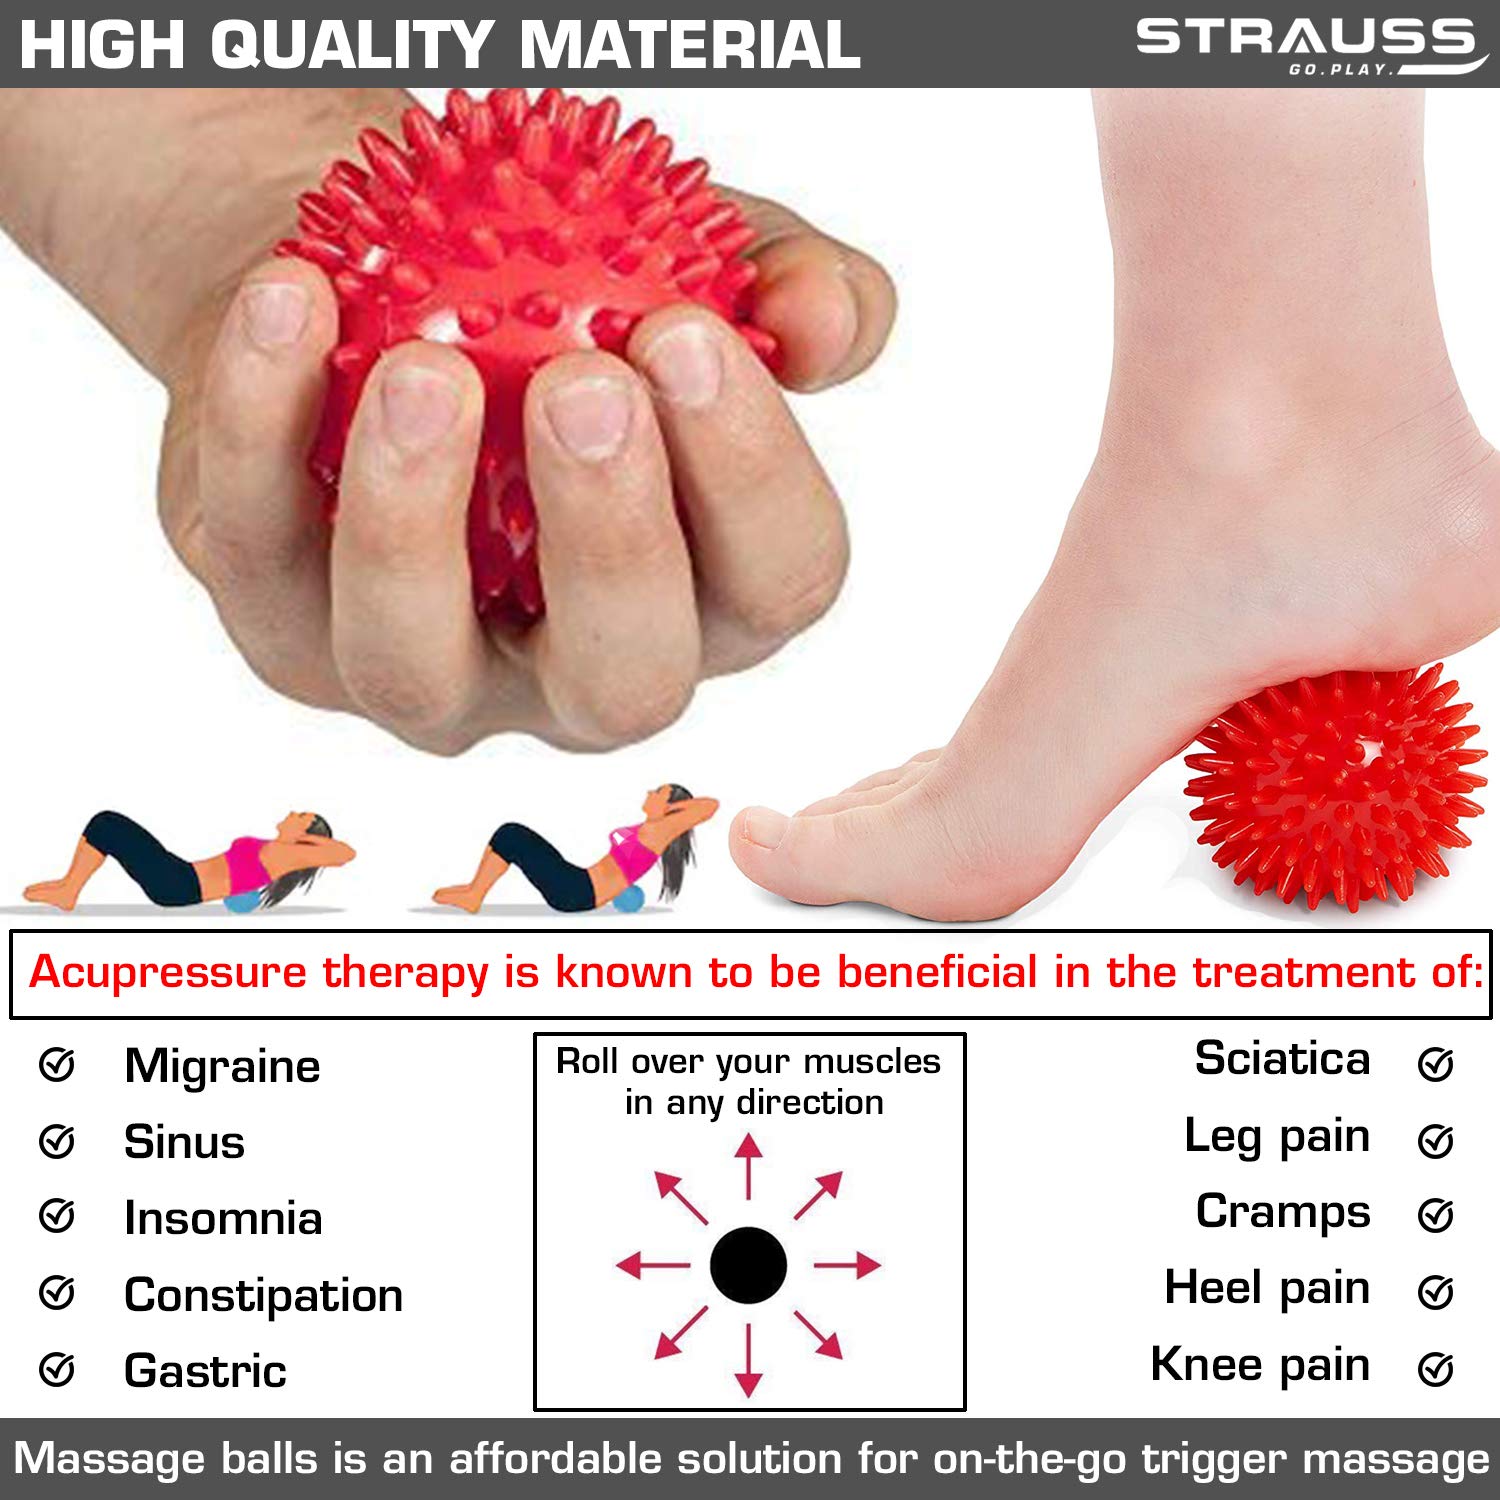 Strauss Acupressure Hard PVC Massage Ball, 2.7-Inch, (Red)